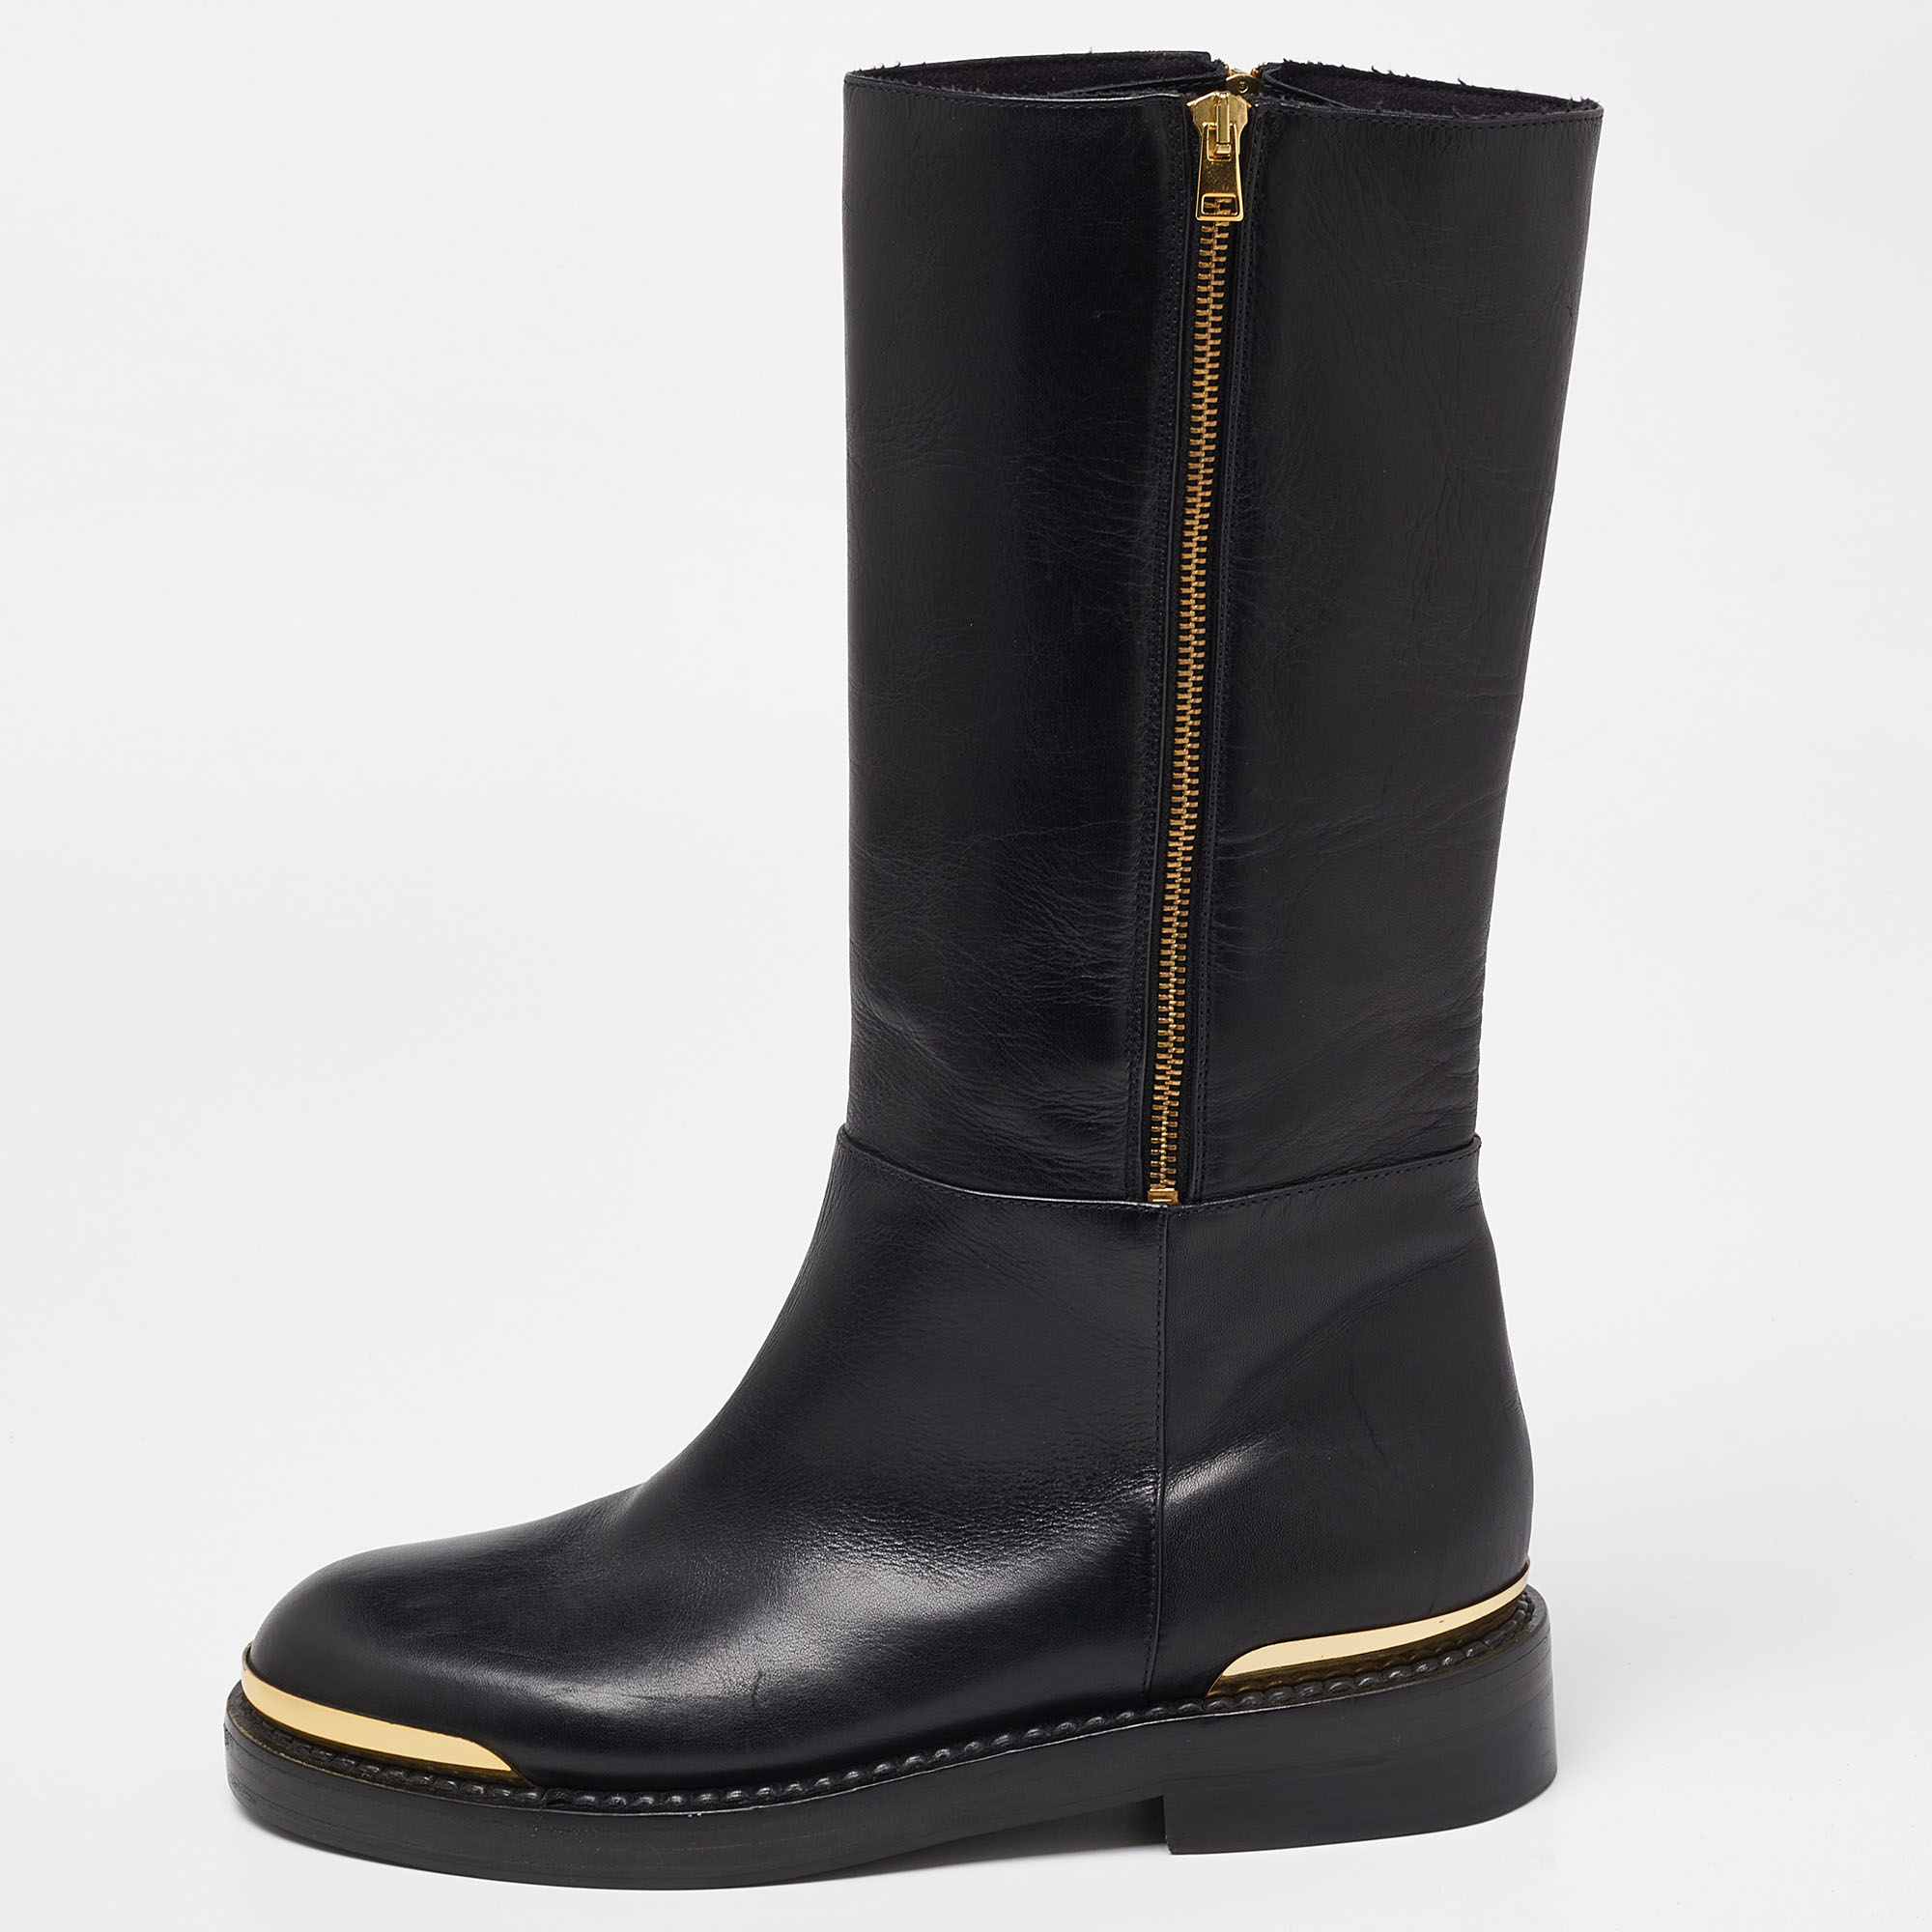 Marni black leather calf length boots size 41